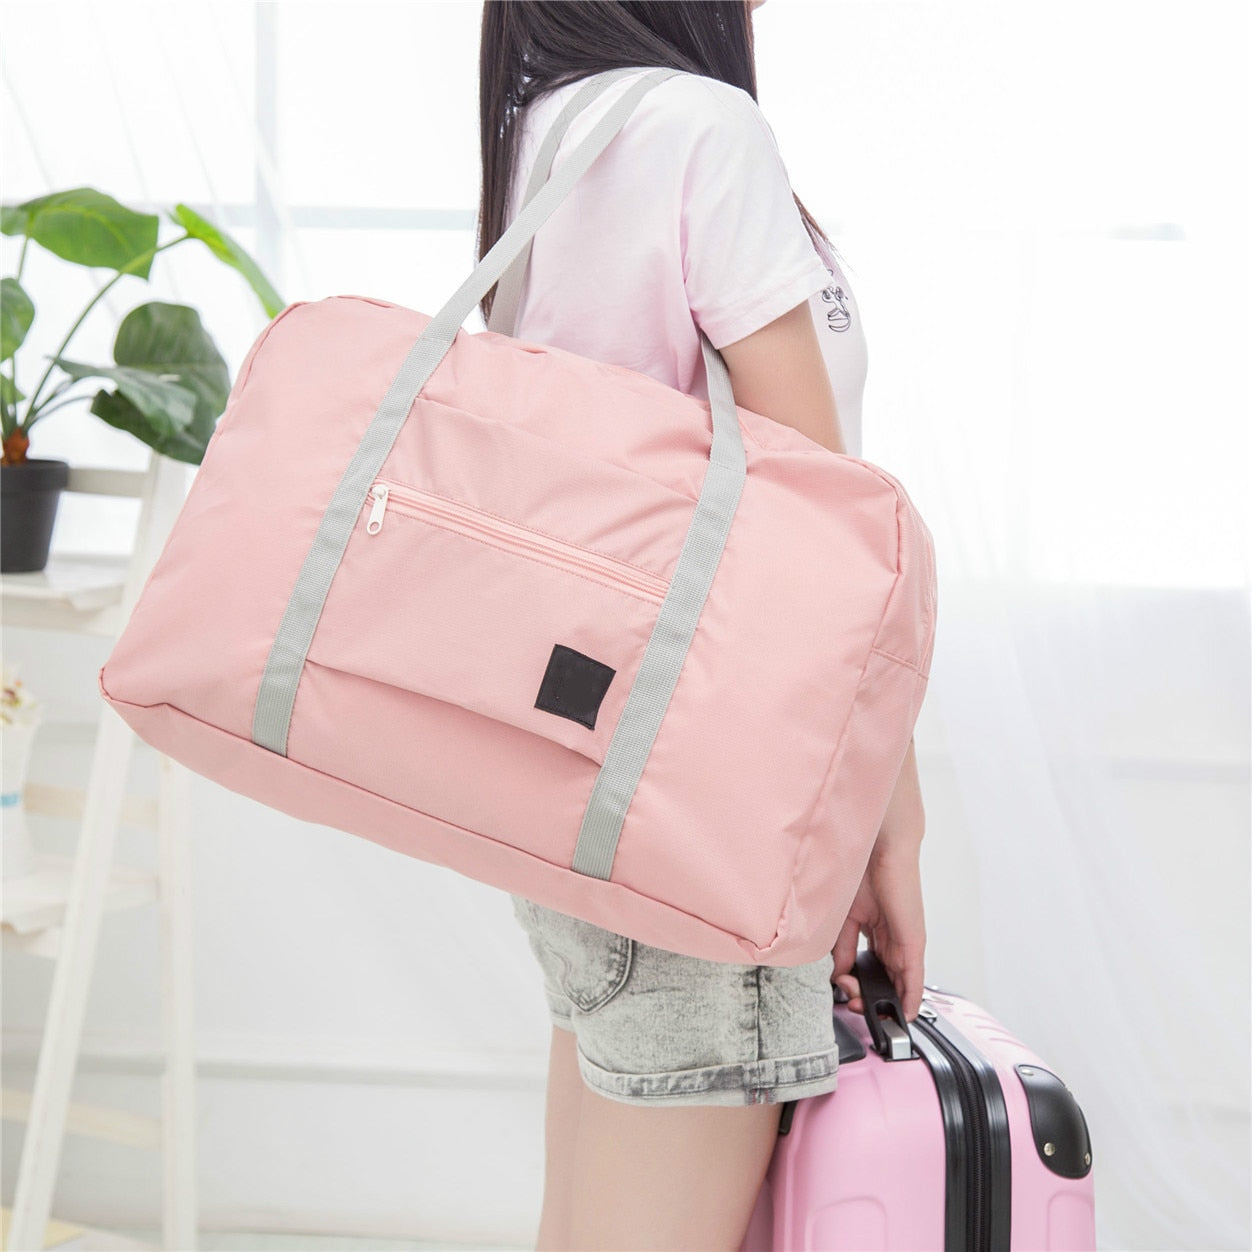 Compact Travel Bag: Waterproof, Versatile, Large Capacity